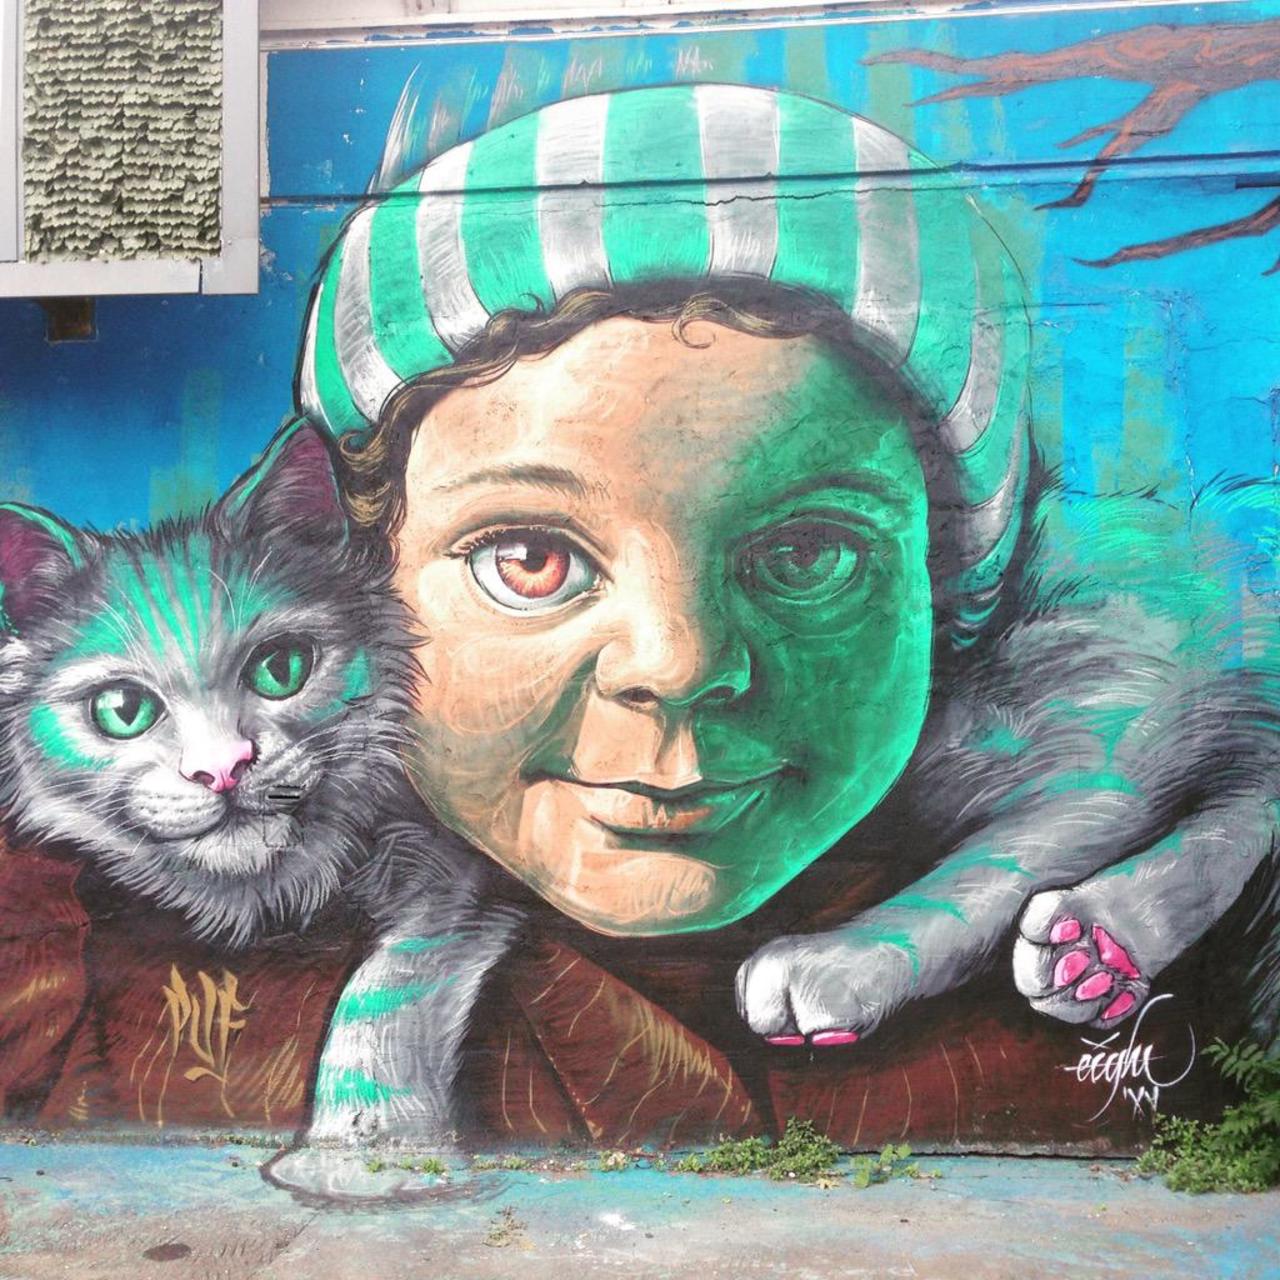 #streetart #milano #graffiti #graffitiart http://t.co/FMW7Kv3pSr